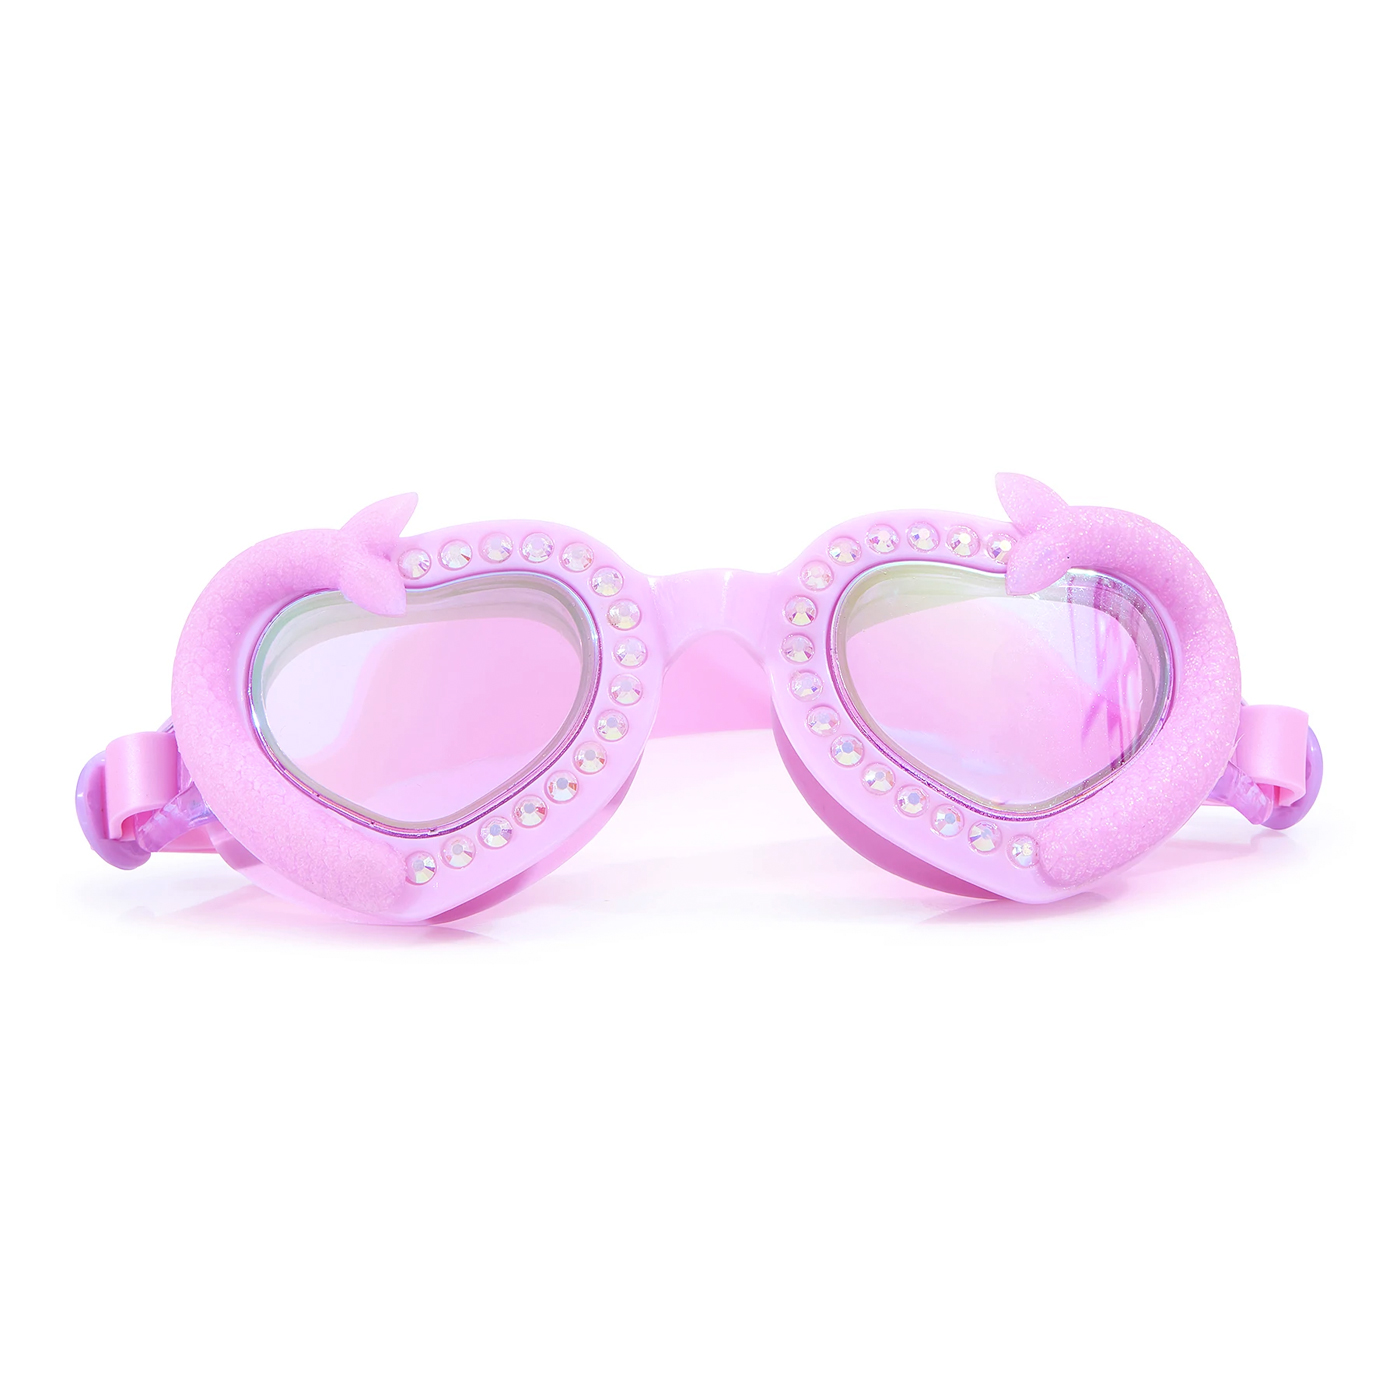  Bling2o Pearly Deniz Gözlüğü  | Posh Pink